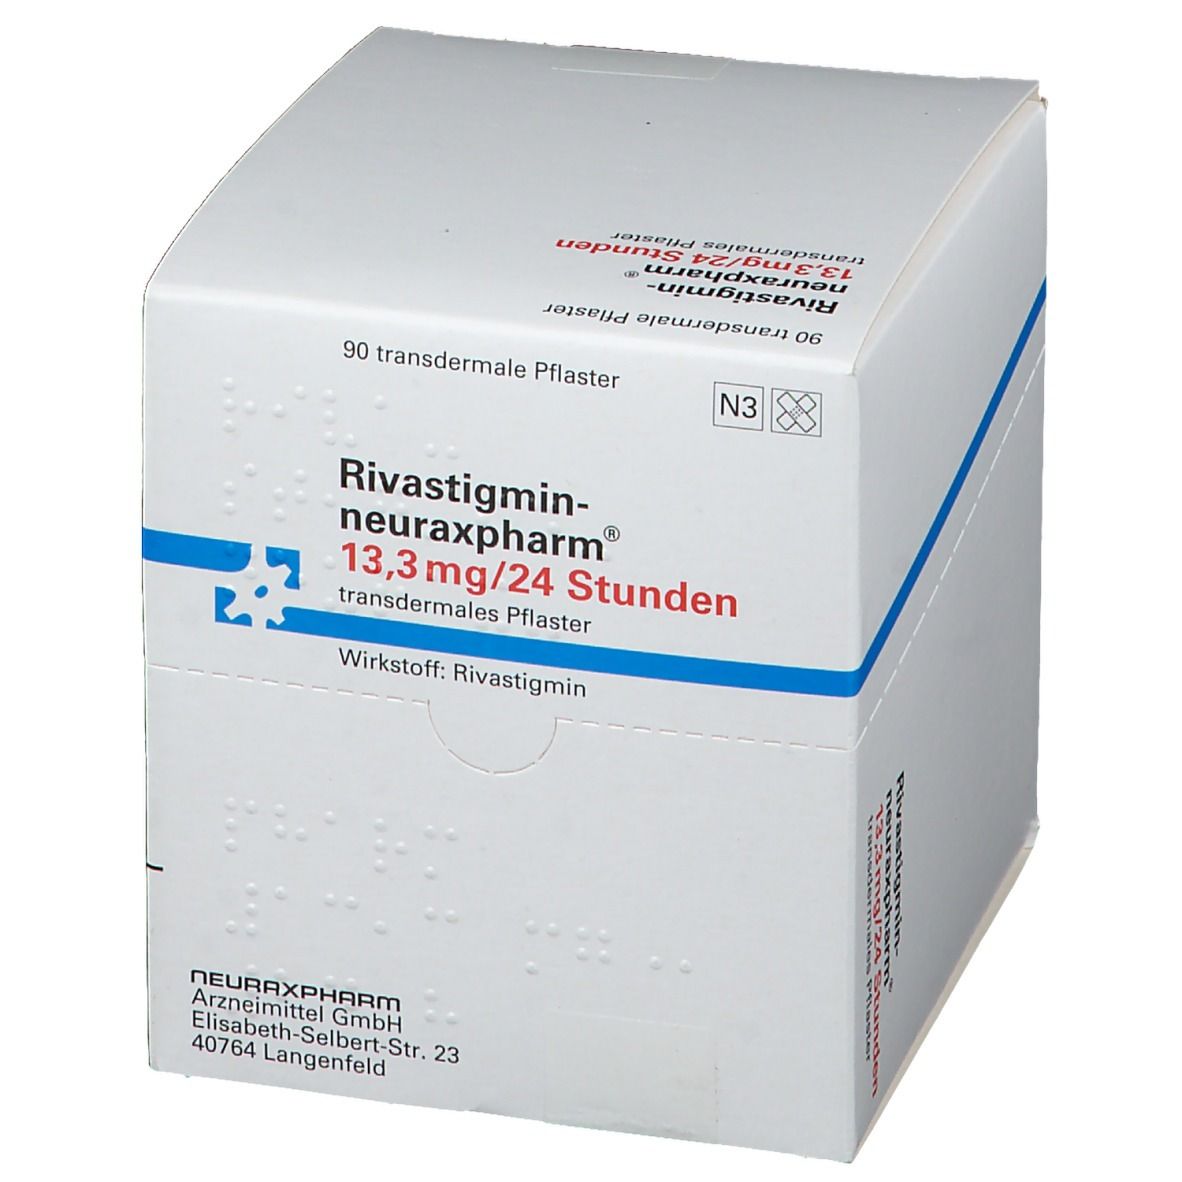 Rivastigmin-neuraxpharm® 13,3 mg/24 Stunden